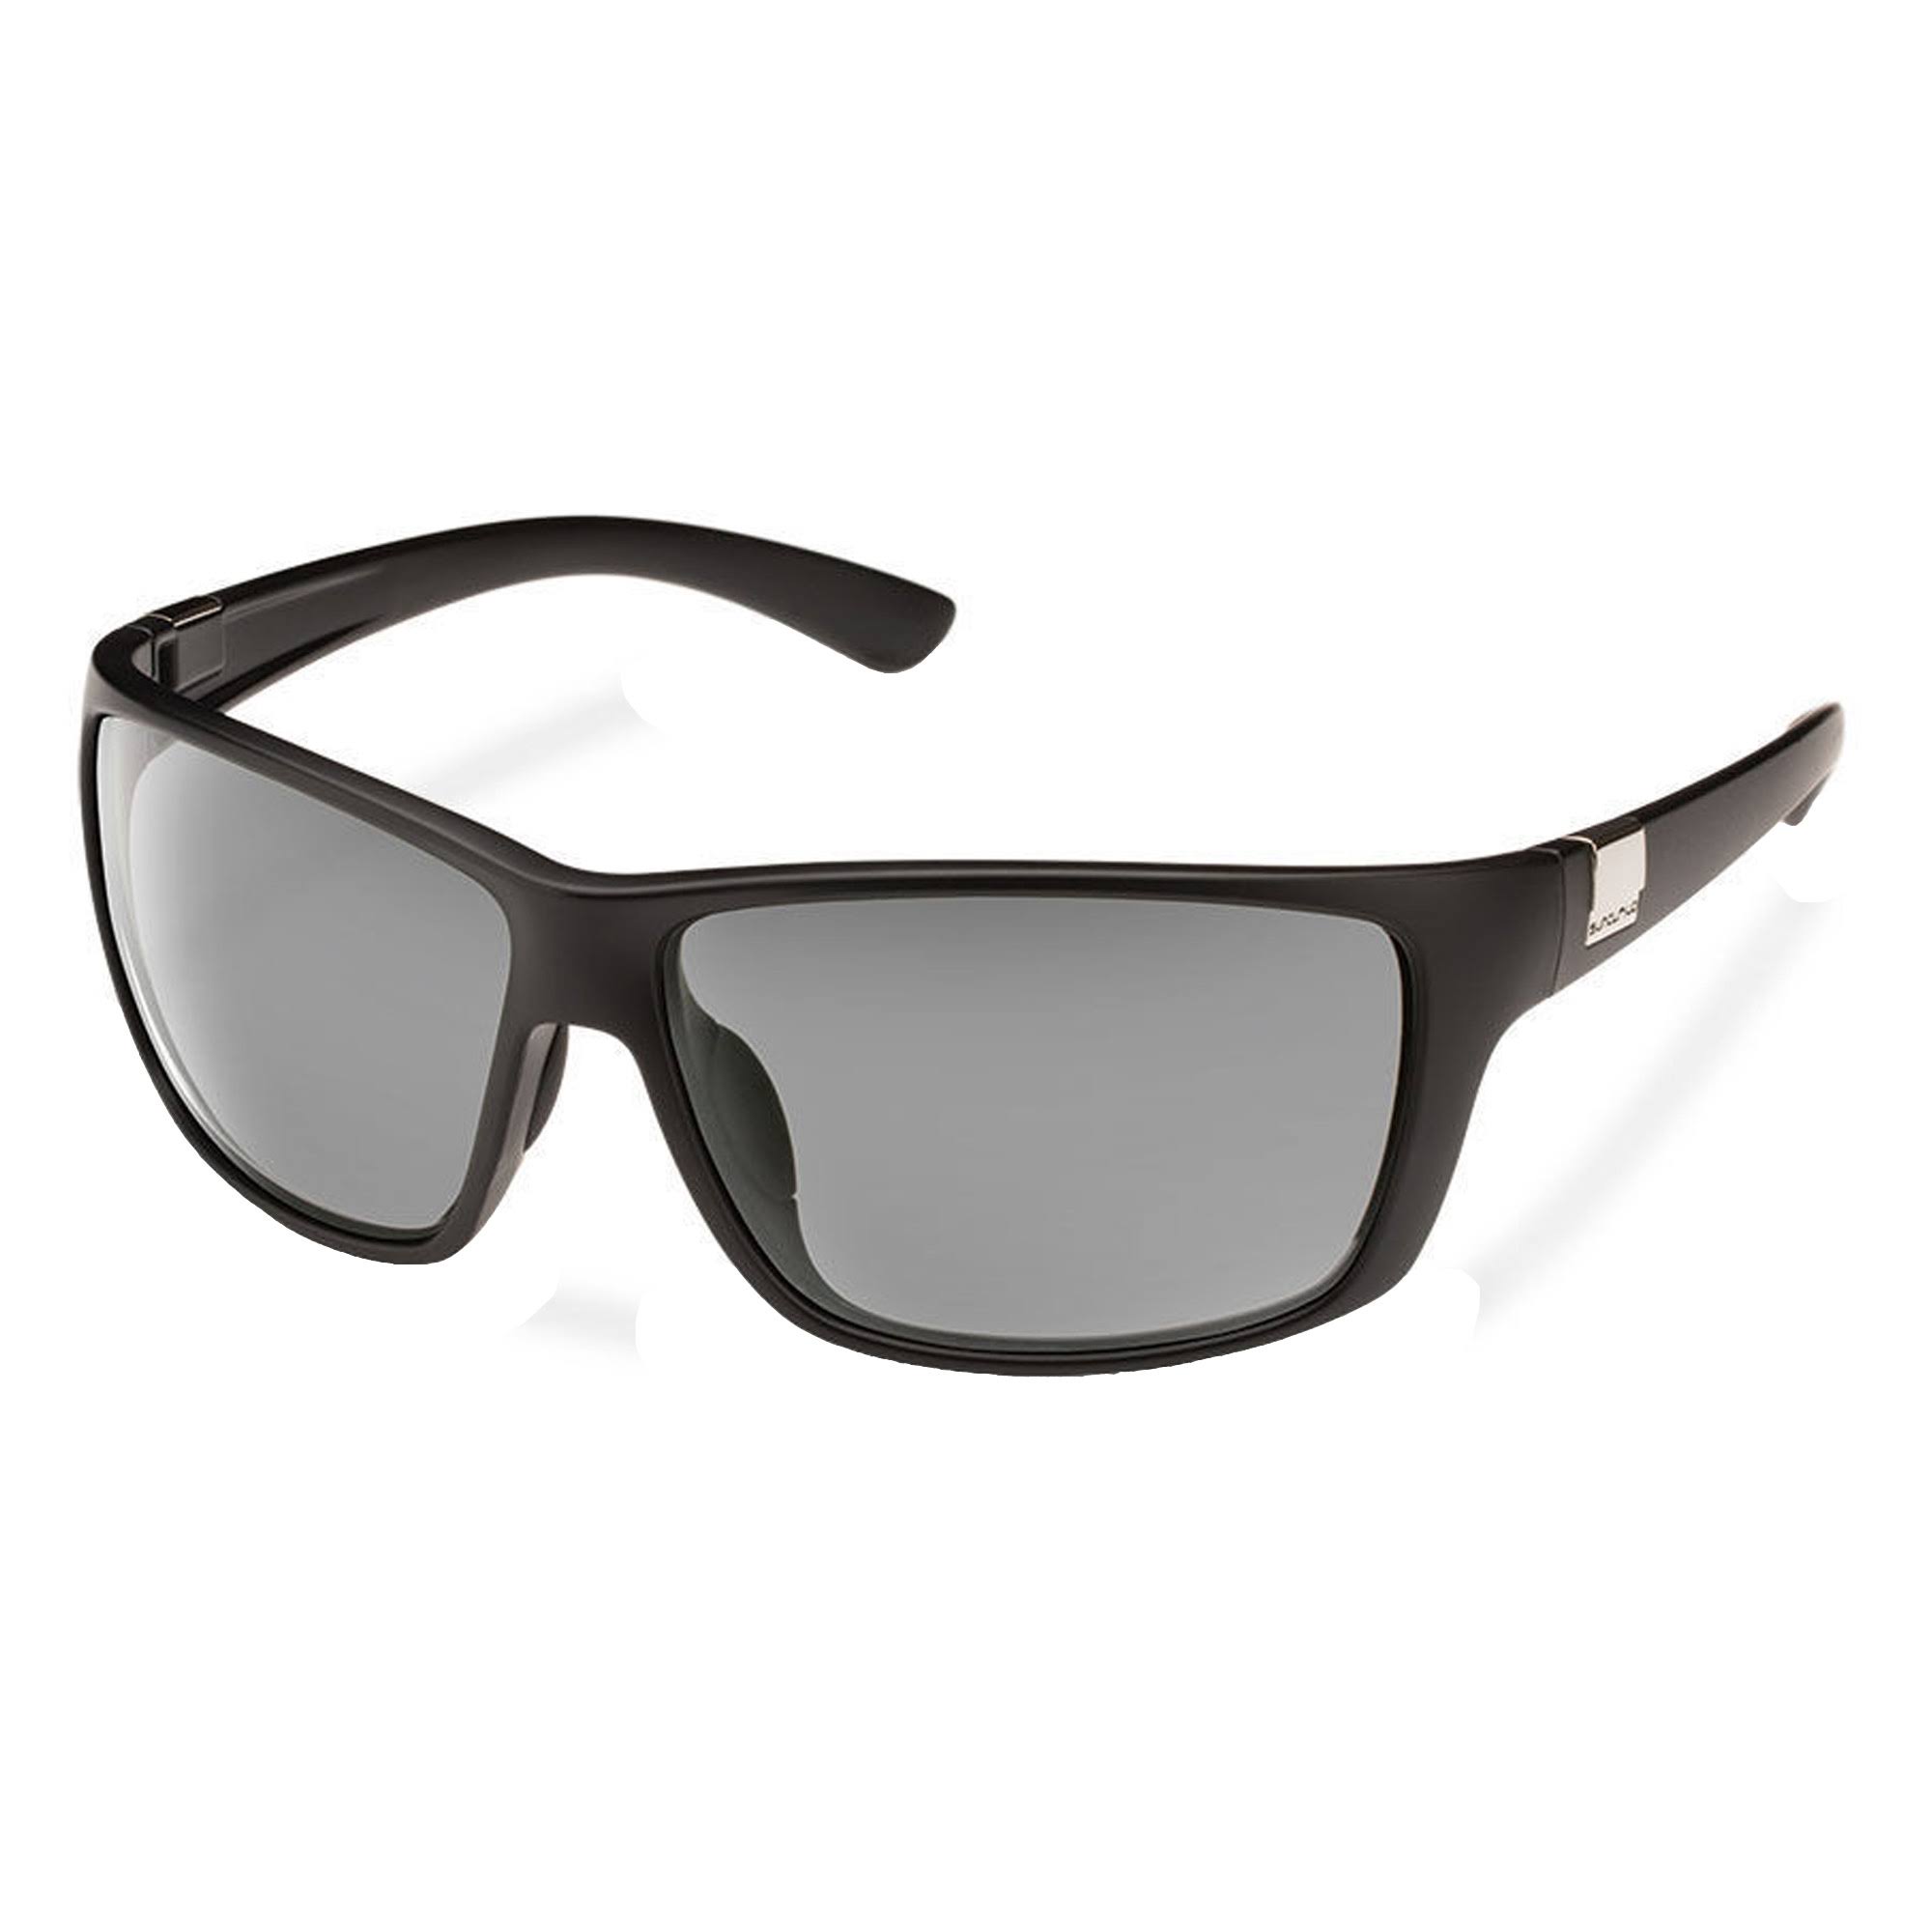 Suncloud Councilman Polarized Sunglasses - Matte Black/Gray